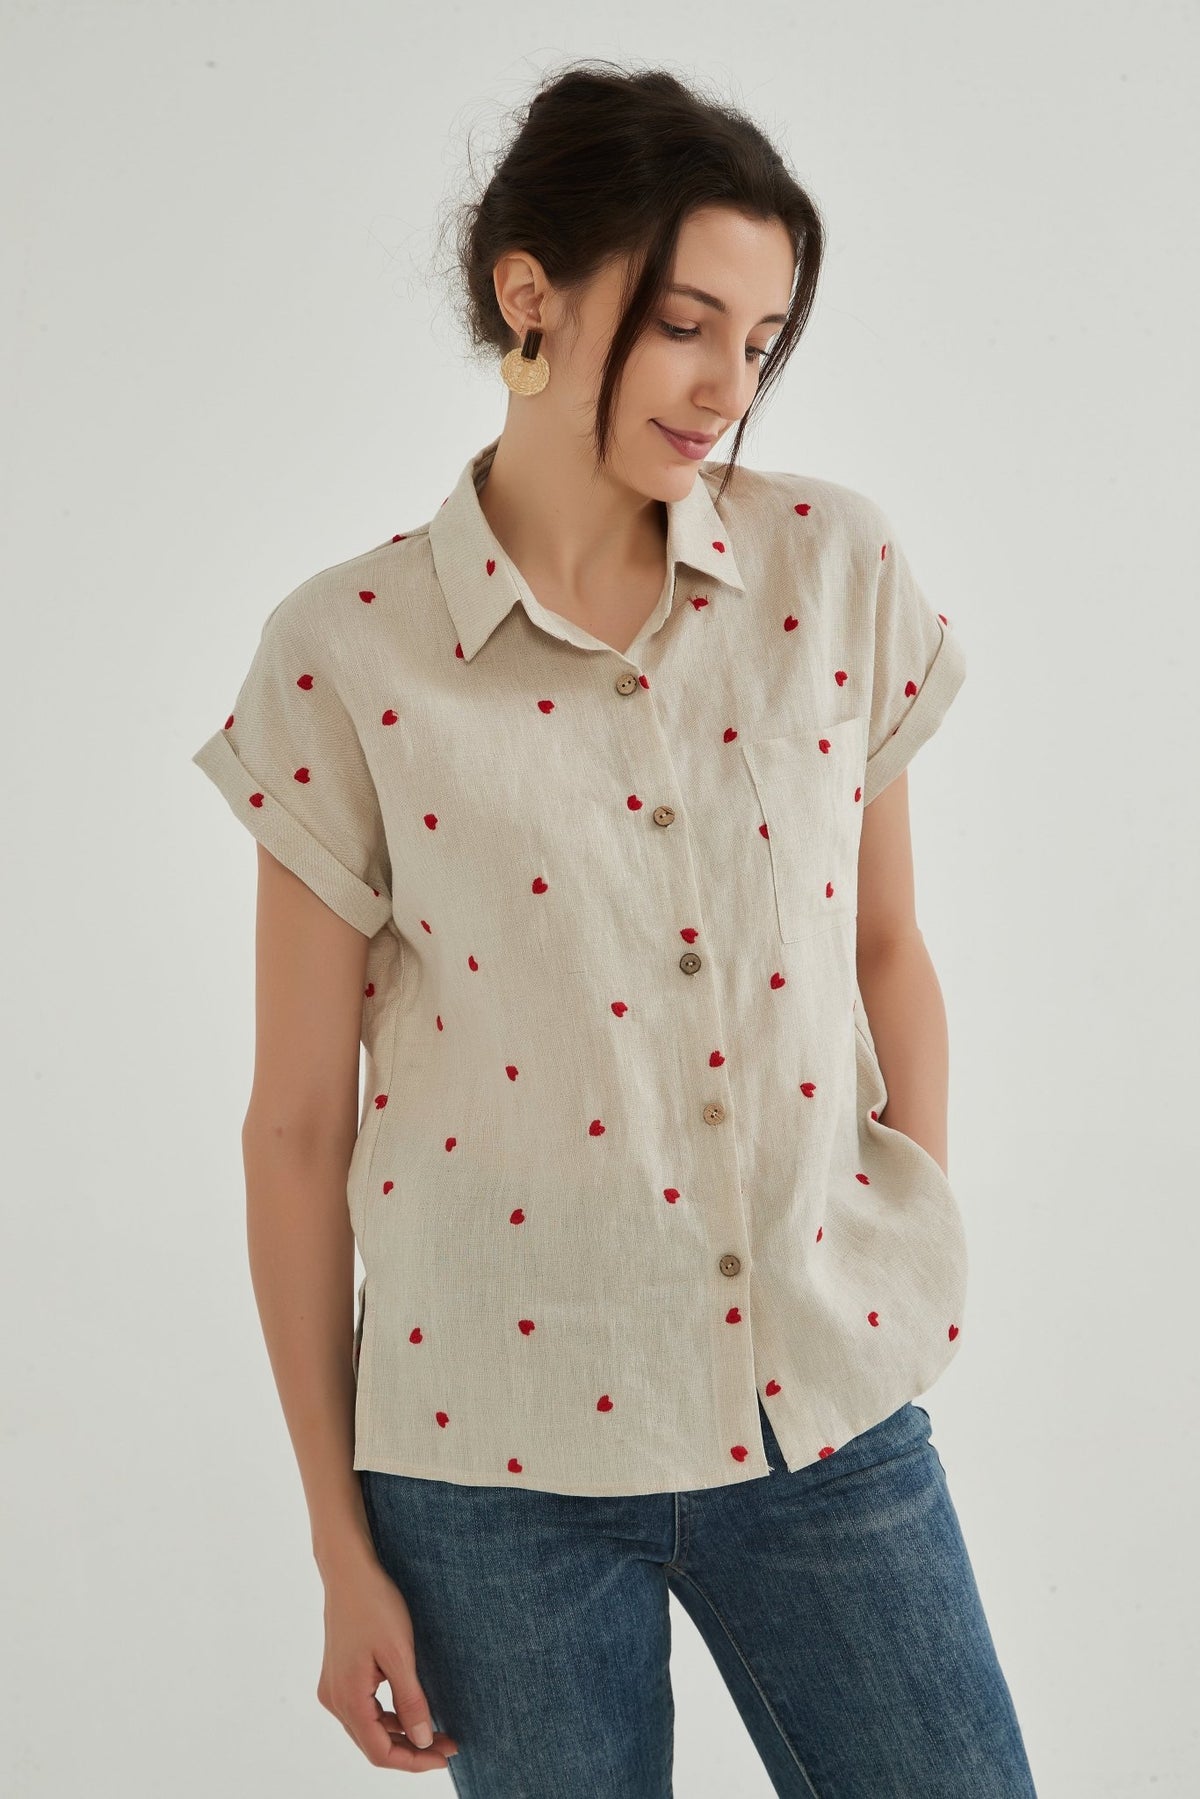 Pre-order Xandra 100% Linen Embroidery Heart Shirt - Whisper Mint